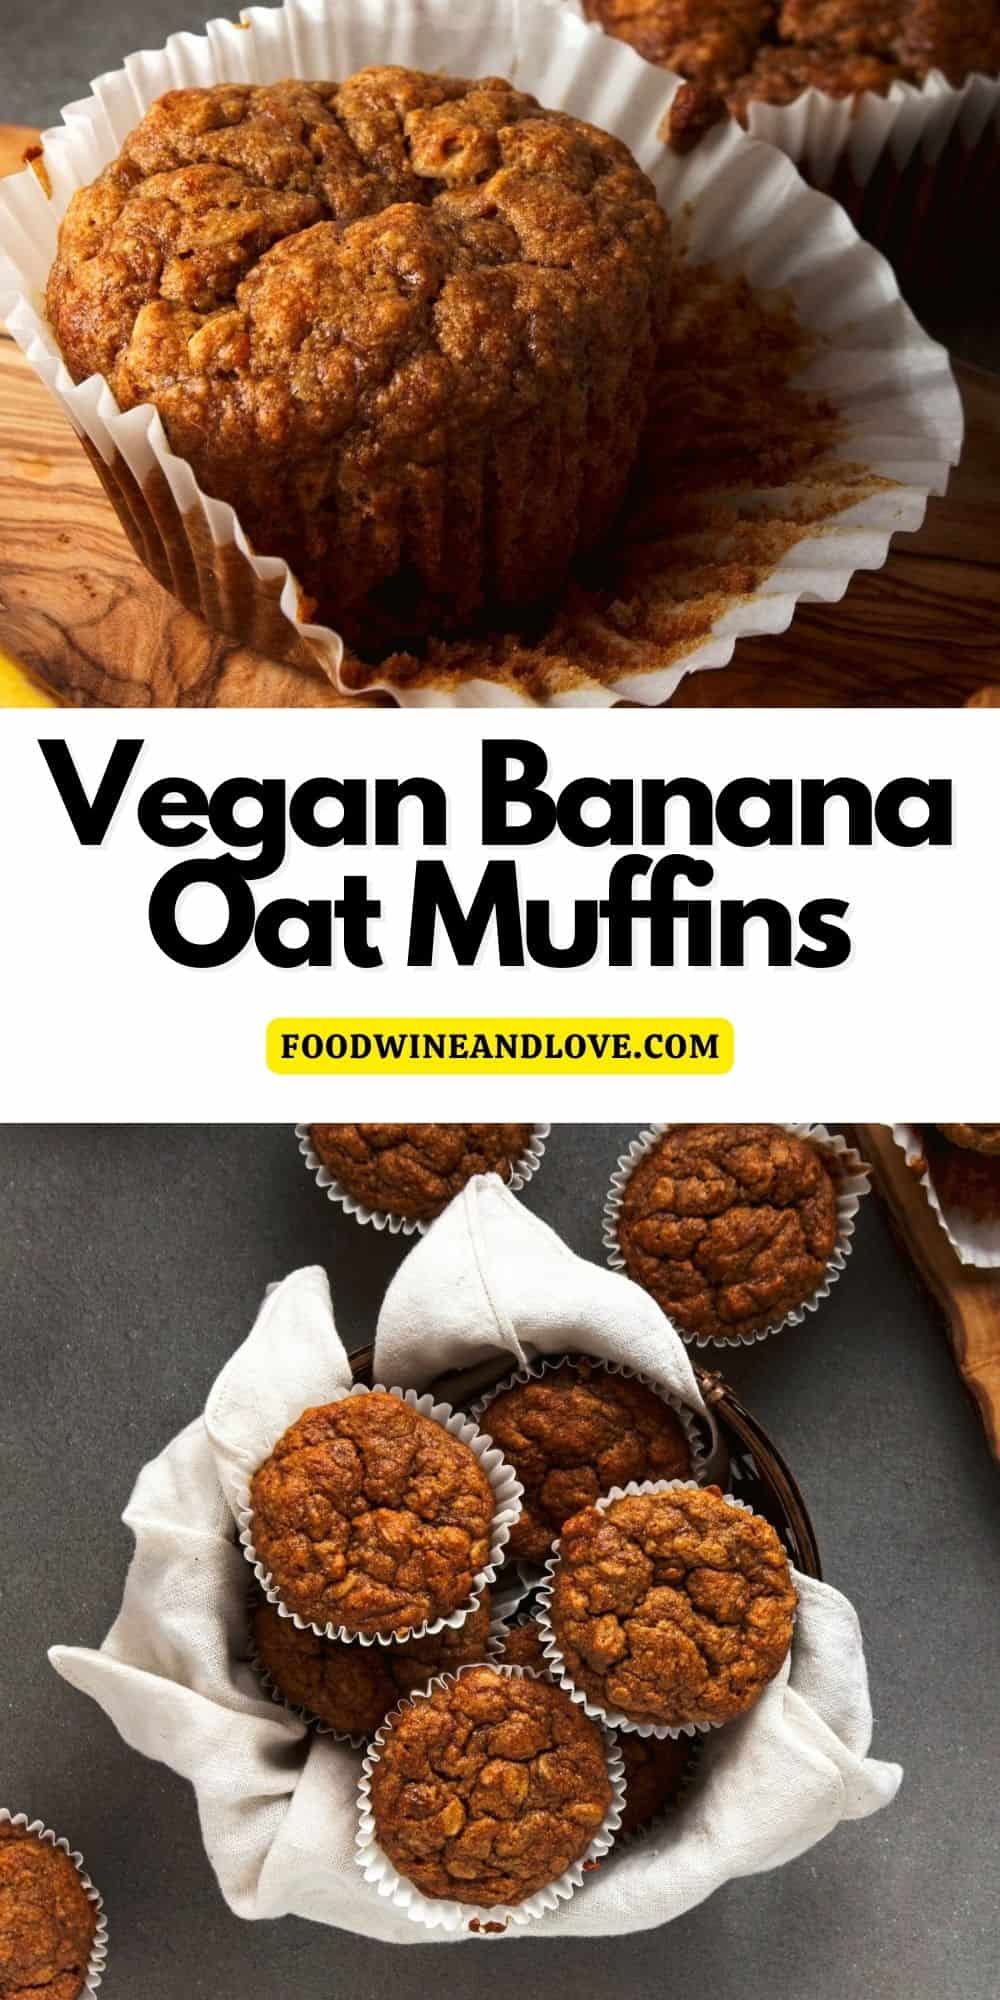 Oat Flour Vegan Muffin Recipe, a delicious baked breakfast, brunch, or snack, idea that is Vegan, Gluten Free and Mediterranean diet friendly.